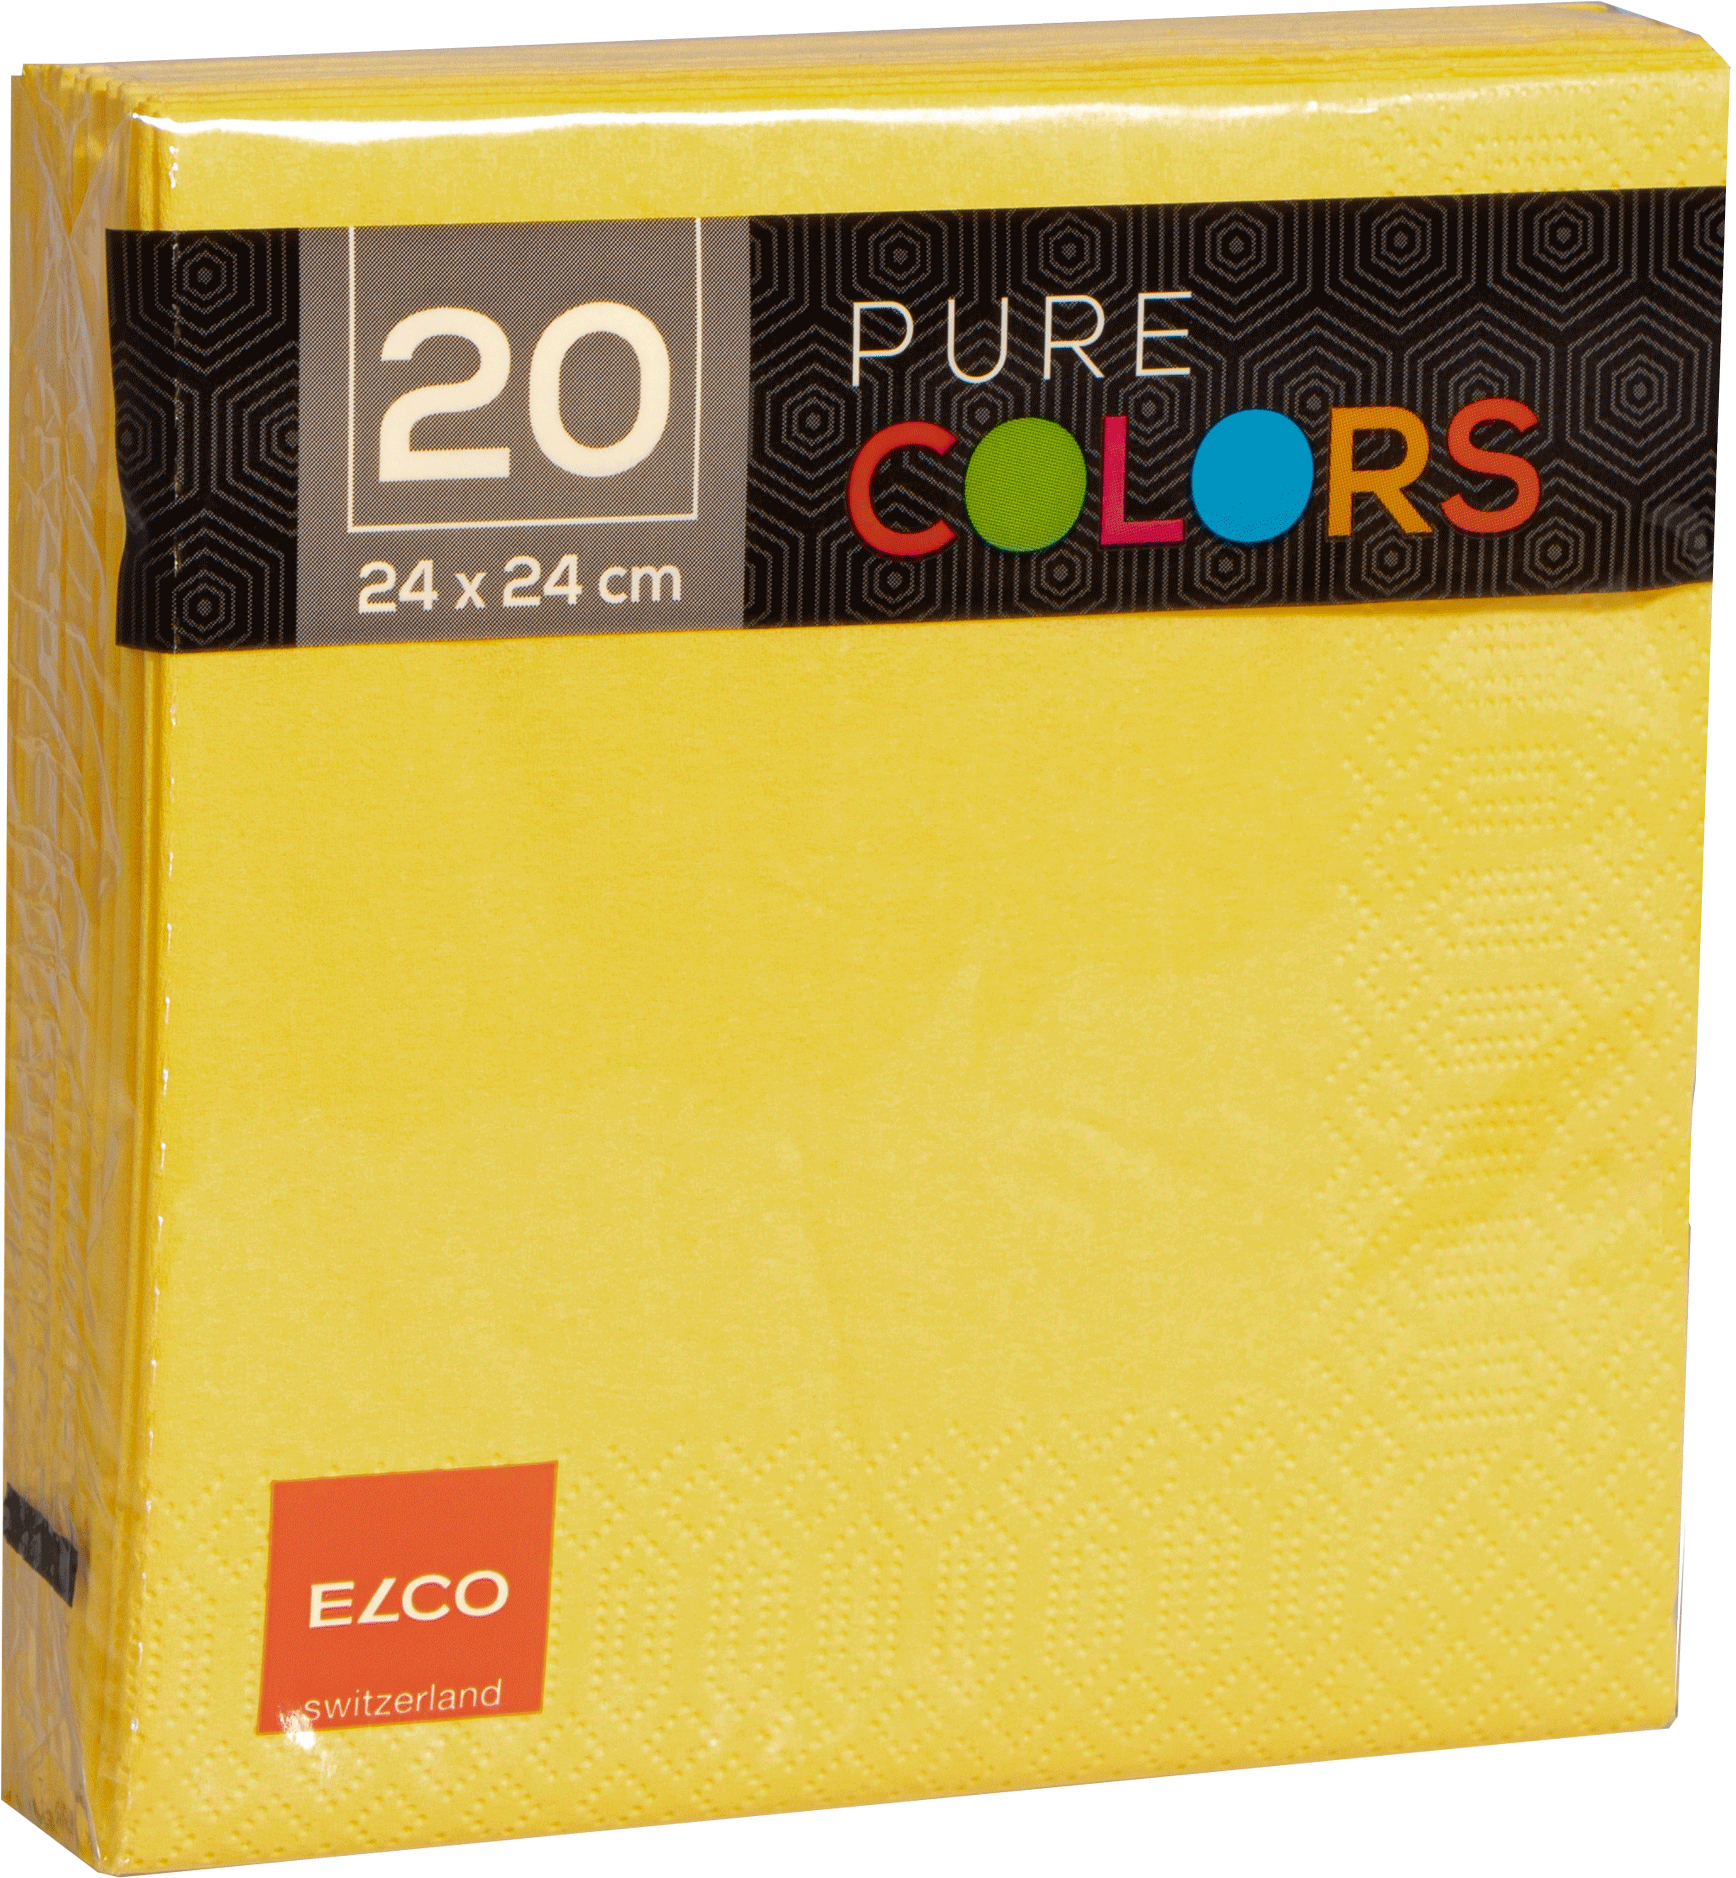 ELCO Serviettes tissue 24x24cm PC234020-010 3 plis, jaune 20pcs.